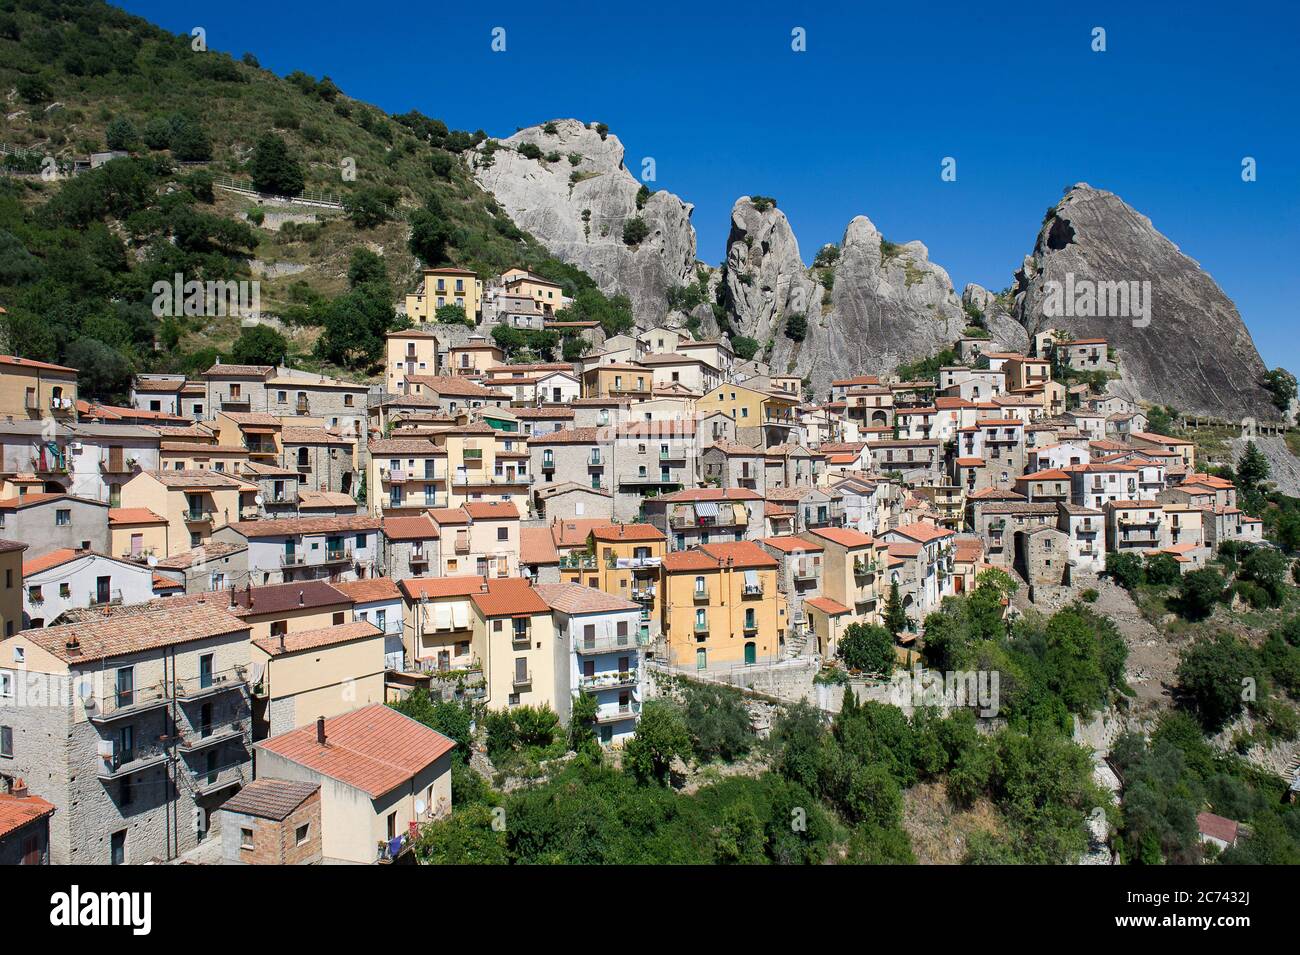 Europe, Italy, Basilicata, Potenza, Castelmezzano, Panoramic view of famous Lucan Dolomites with beautiful mountain village of Castelmezzano Stock Photo